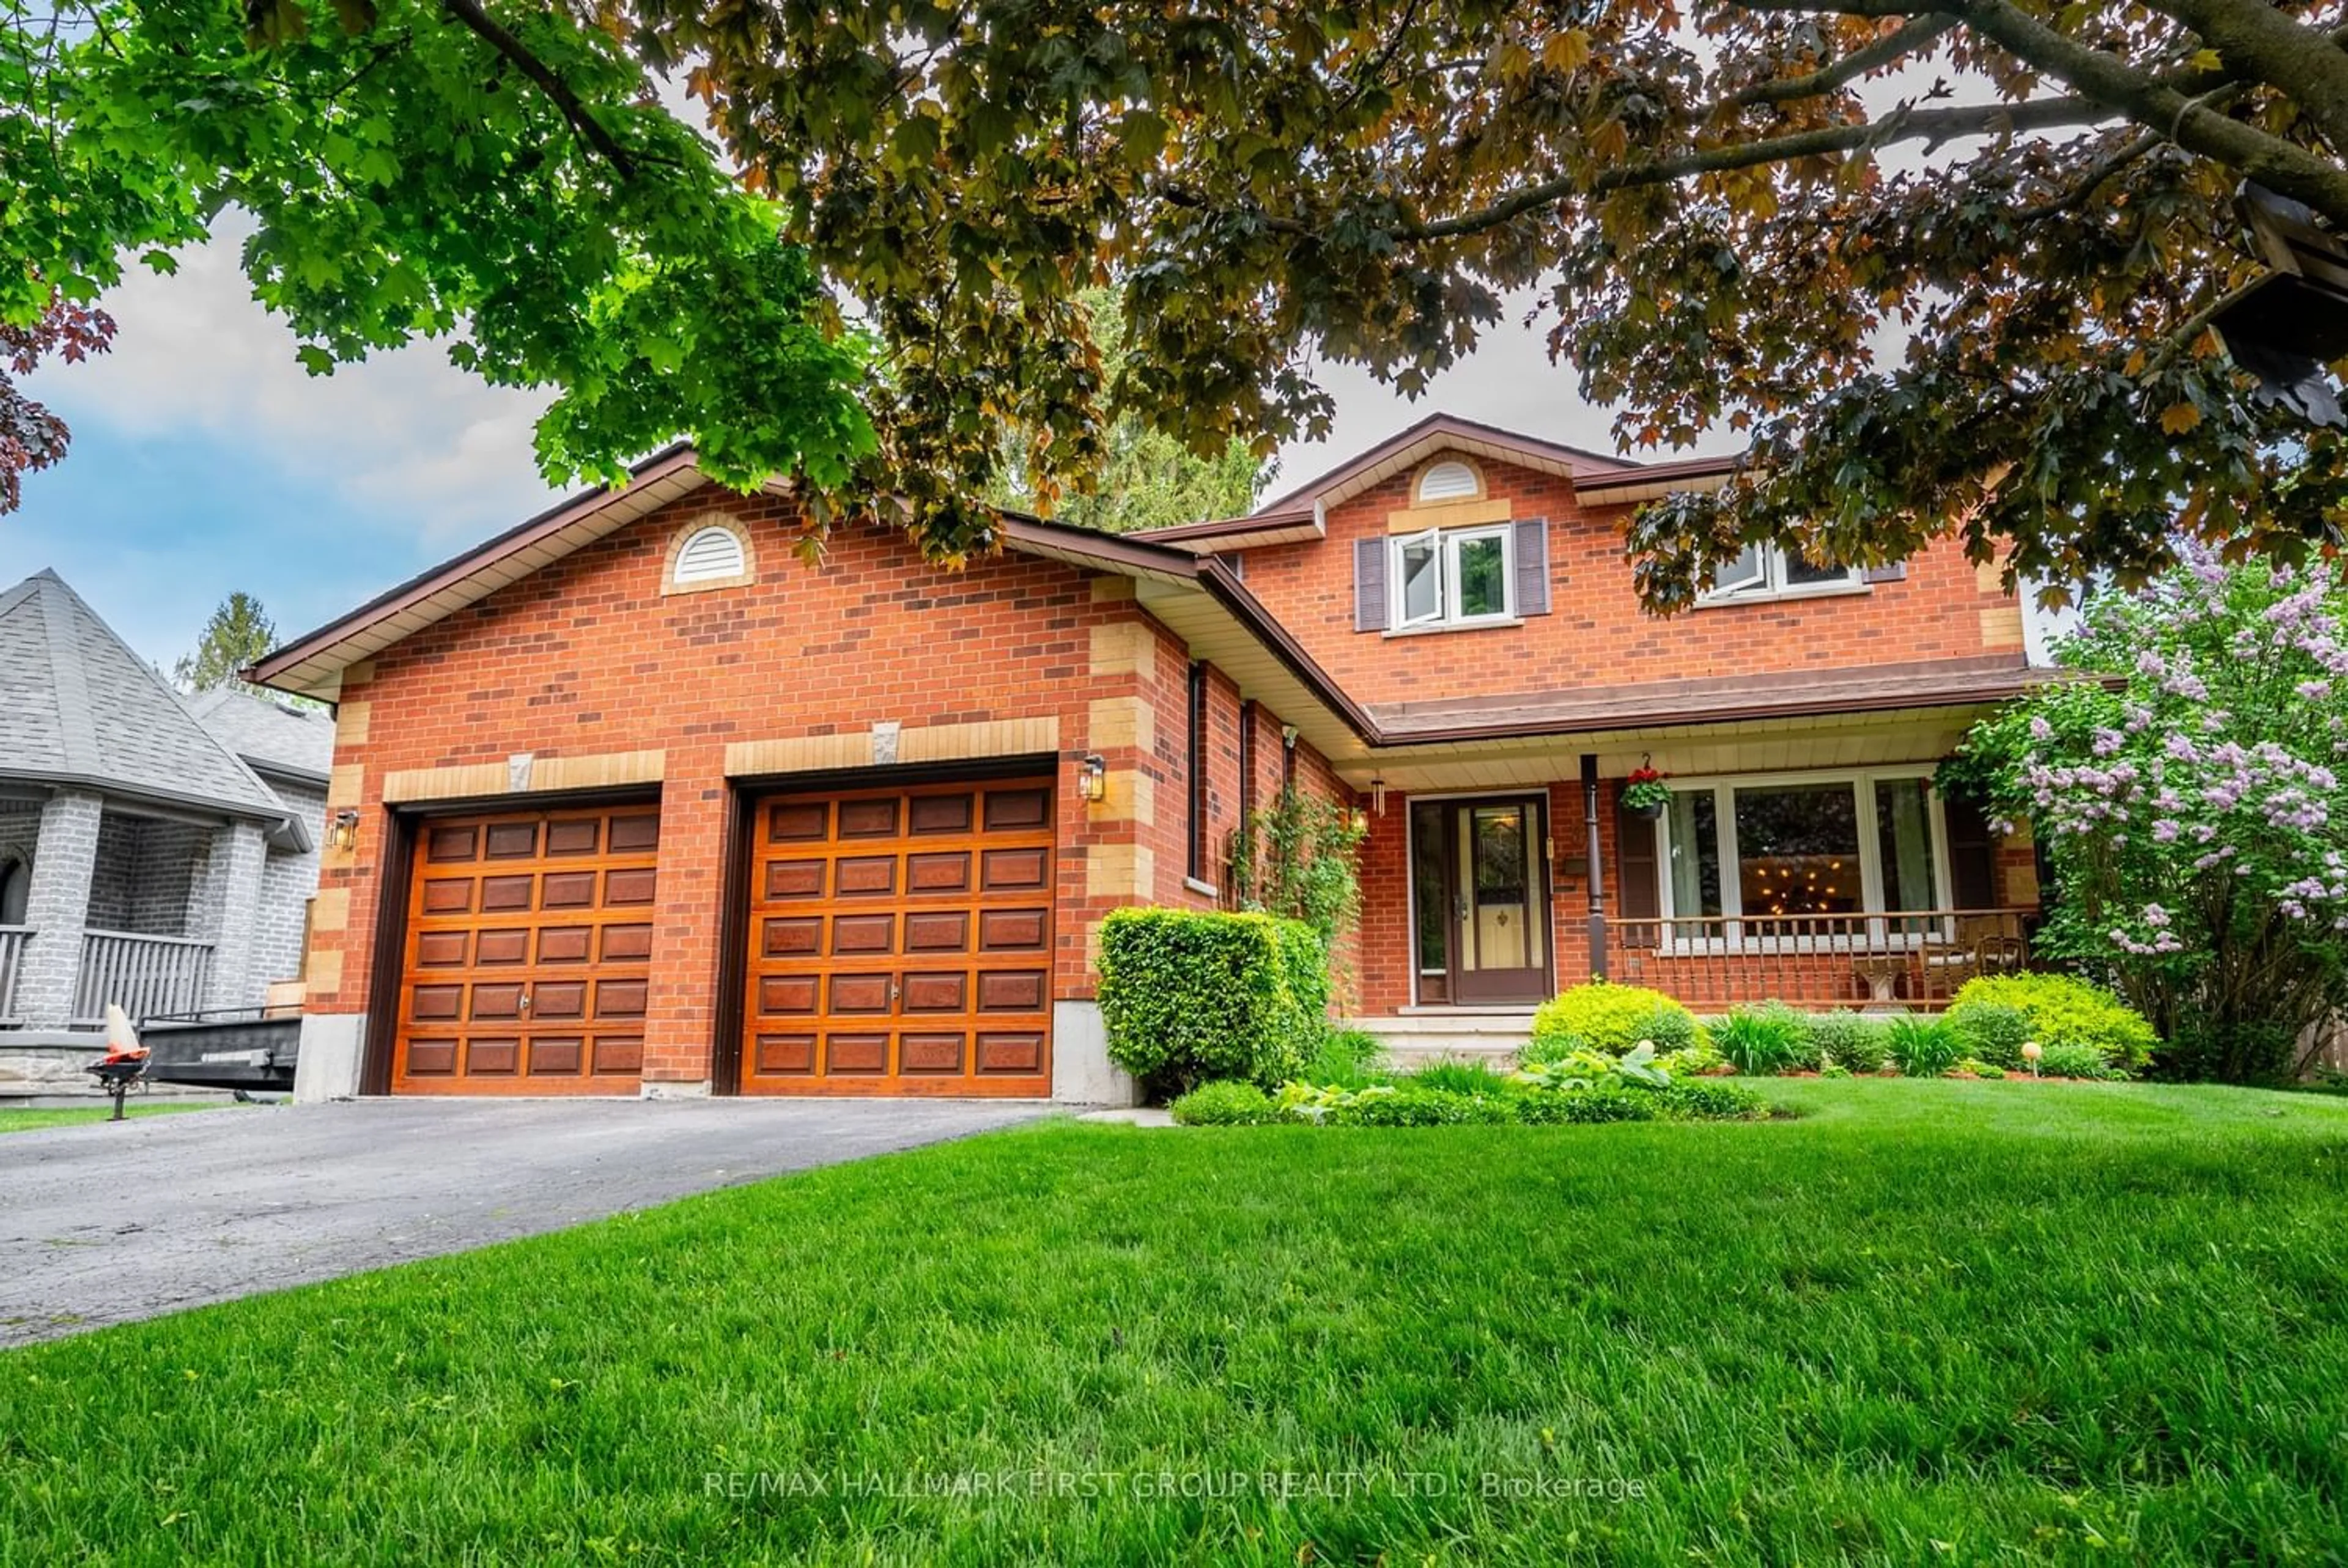 Home with brick exterior material for 33 Renwick Rd, Clarington Ontario L1E 1V5